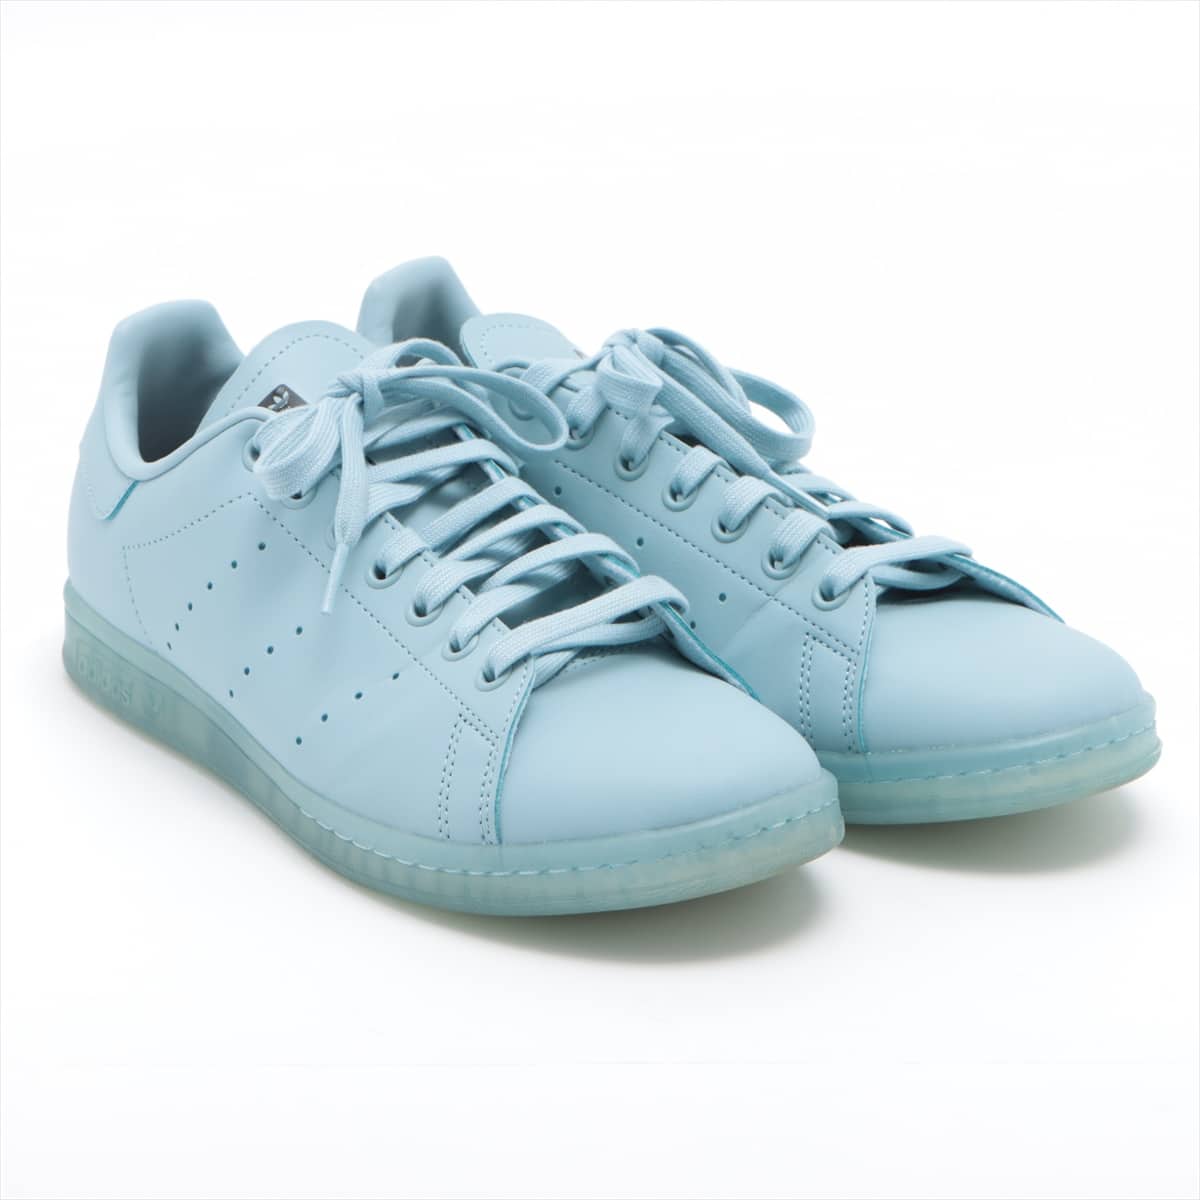 adidas x Star Wars 22 years Leather Sneakers 27cm Men's Blue Stan Smith Boba Fett GX6777